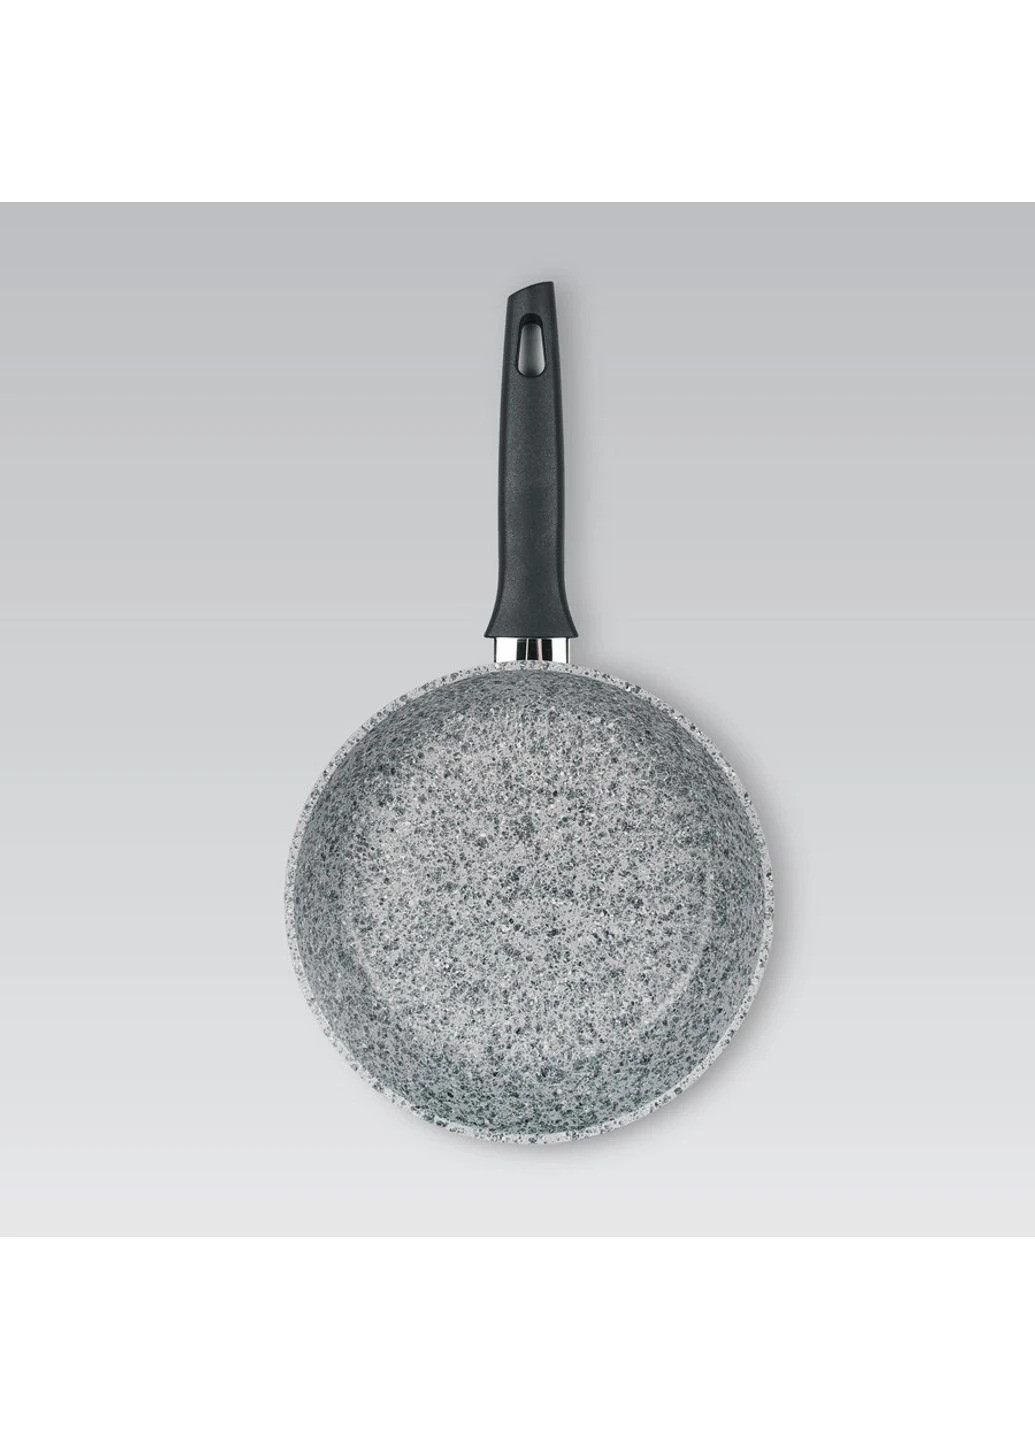 Сковорода універсальна MR-1210-24-N 24 см сіра алюміній Maestro (261406928)